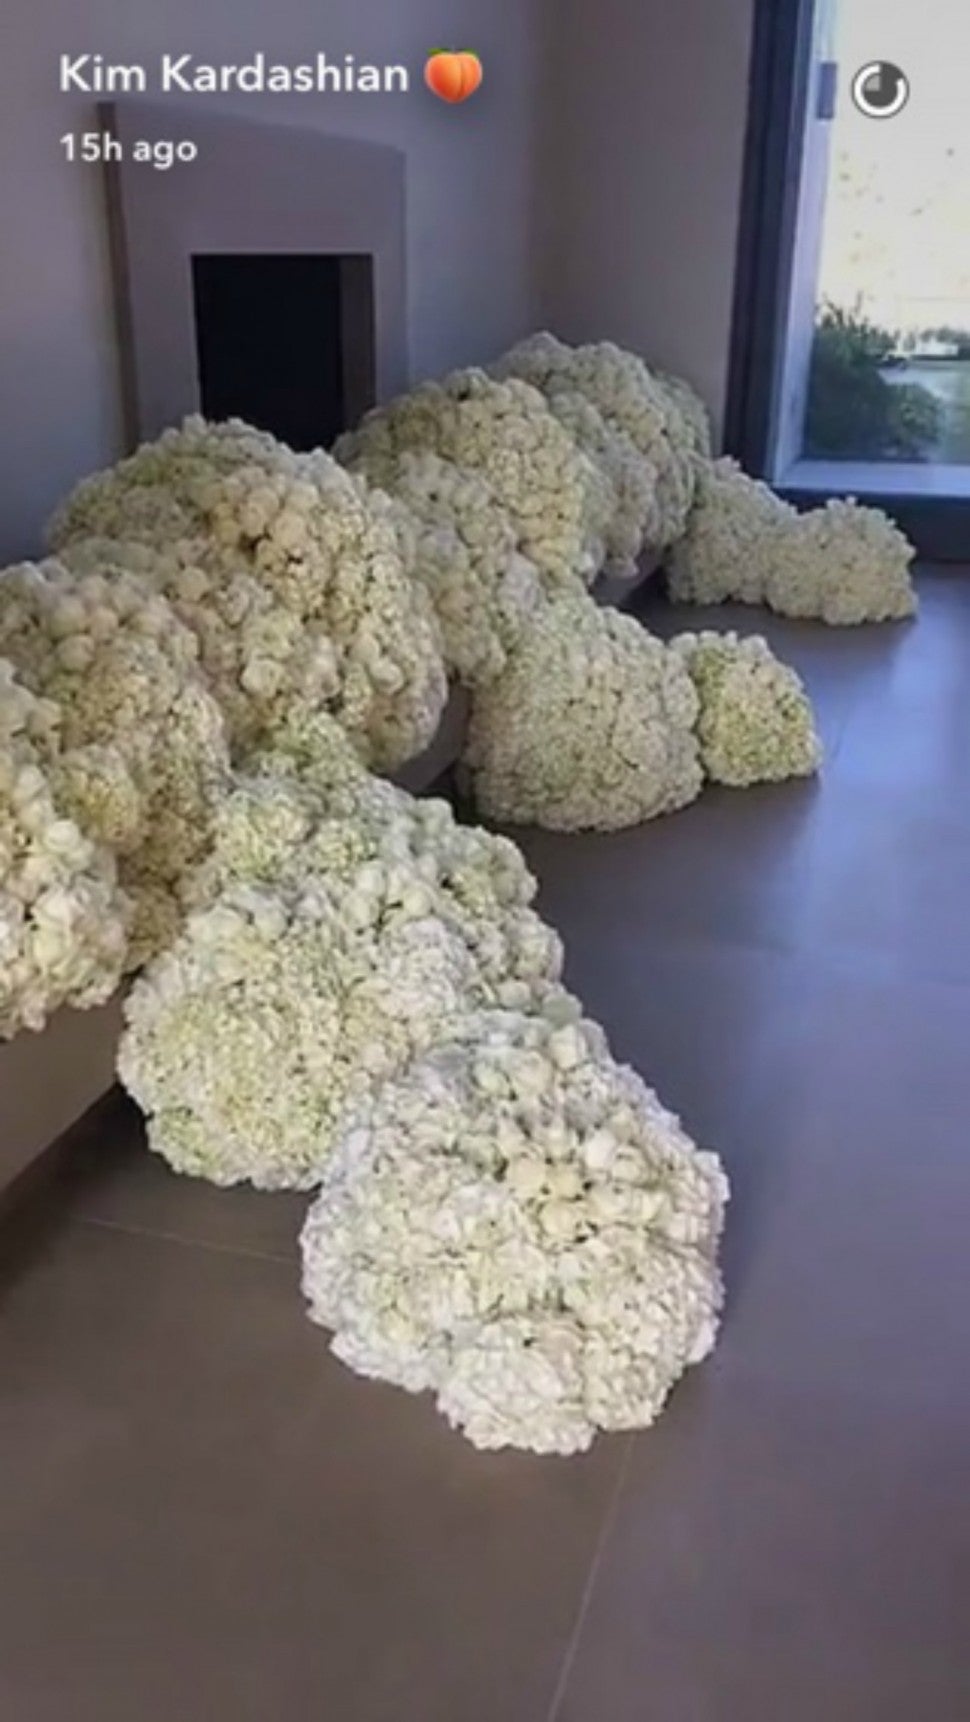 Kanye West Surprises Kim Kardashian With Bouquets of 'Floating Flowers